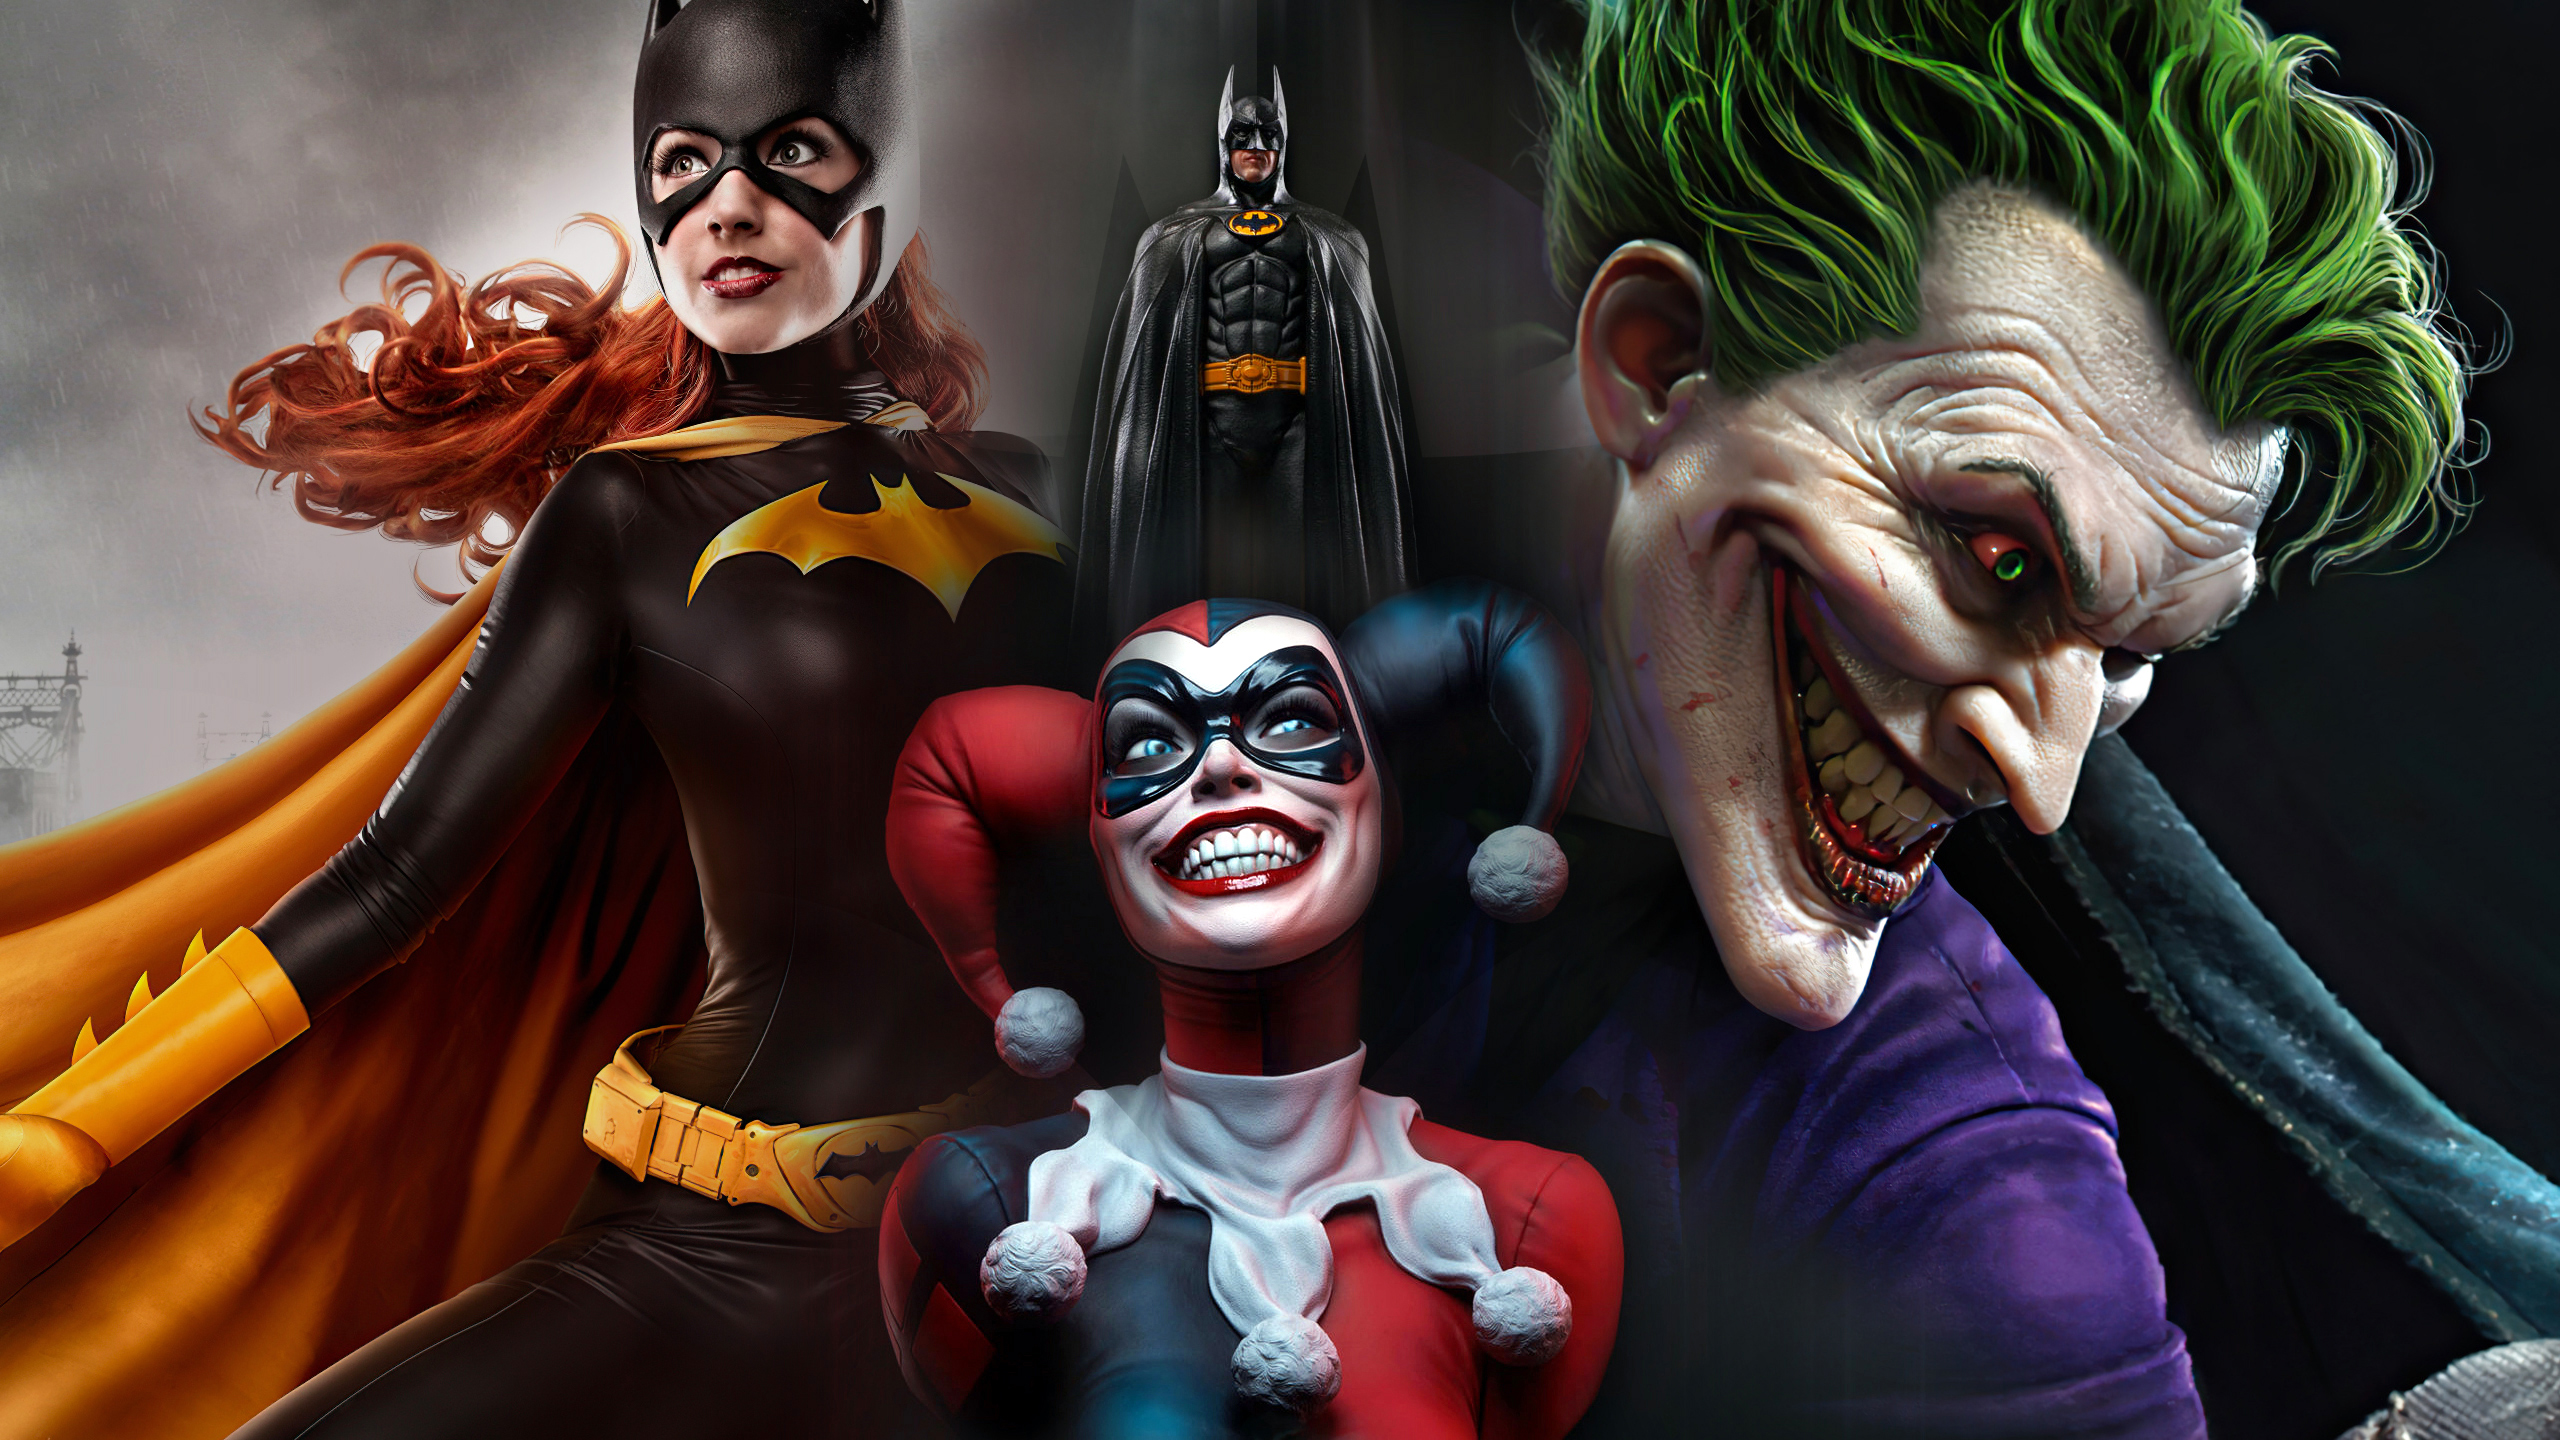 Gotham City Sirens DC Comics Batman Joker Harley Quinn Bat Girl 2560x1440